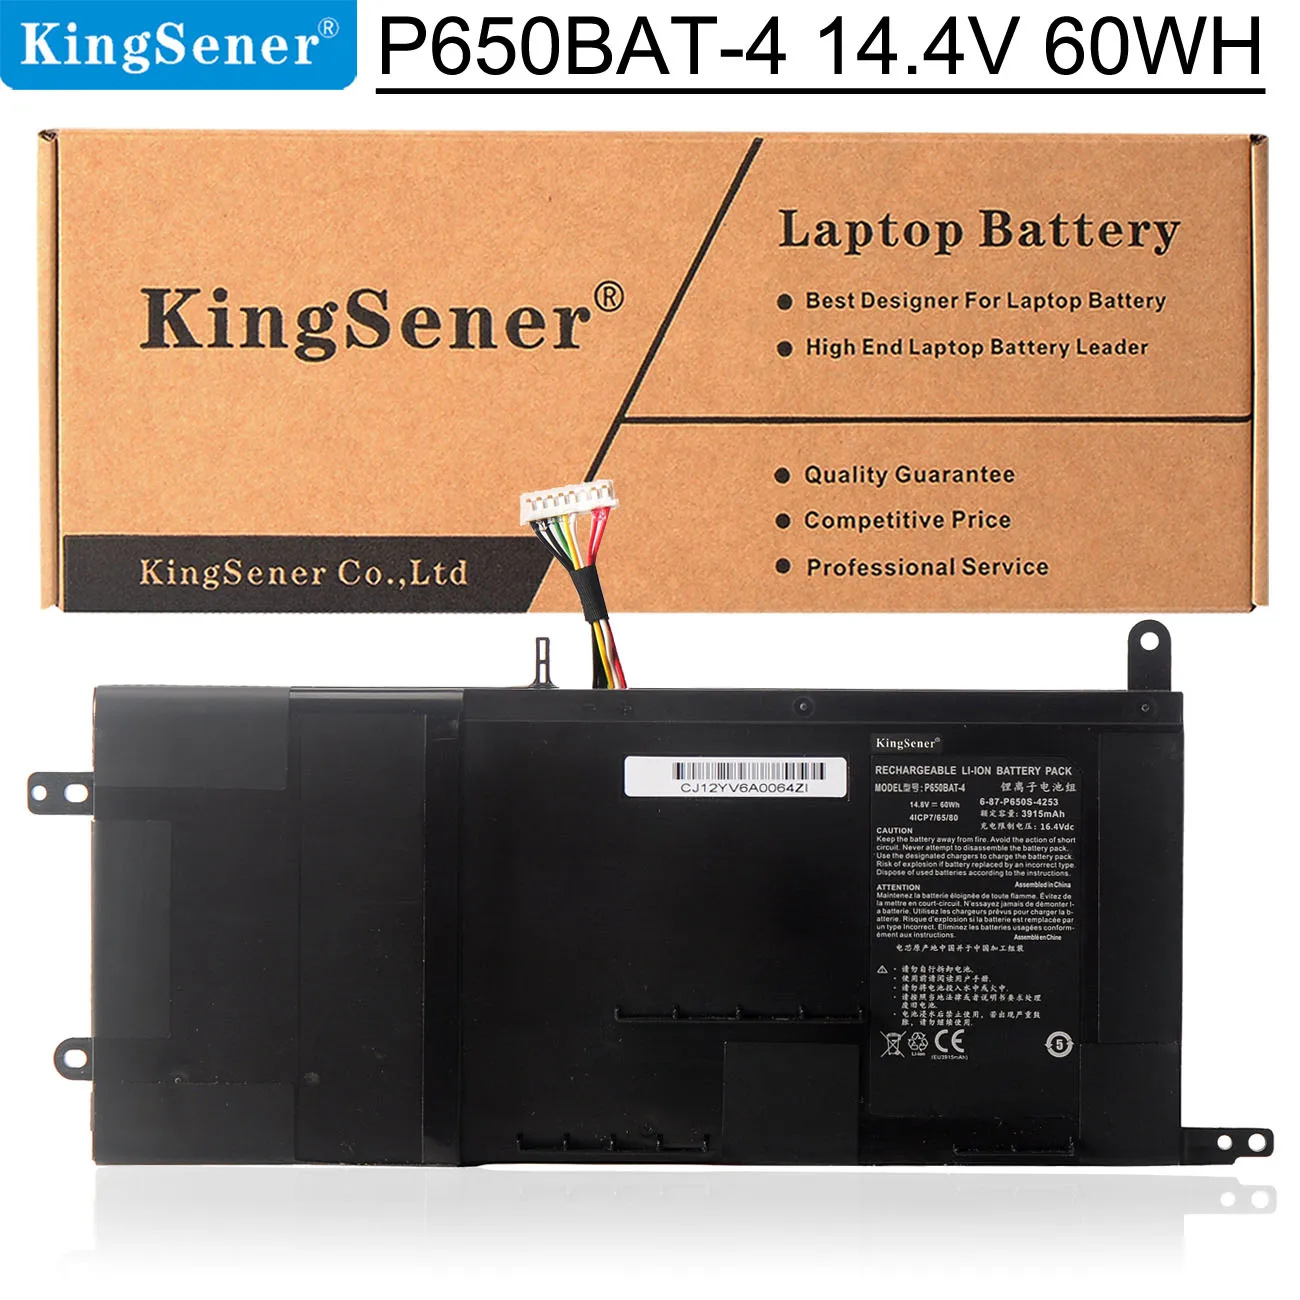 KingSener Neue P650BAT-4 Laptop Batterie Für Clevo P650 P651 P655 P671 RA P670-RG SAGER NP8650 NP8651 NP8652 6-87-P650S-4U311 60Wh